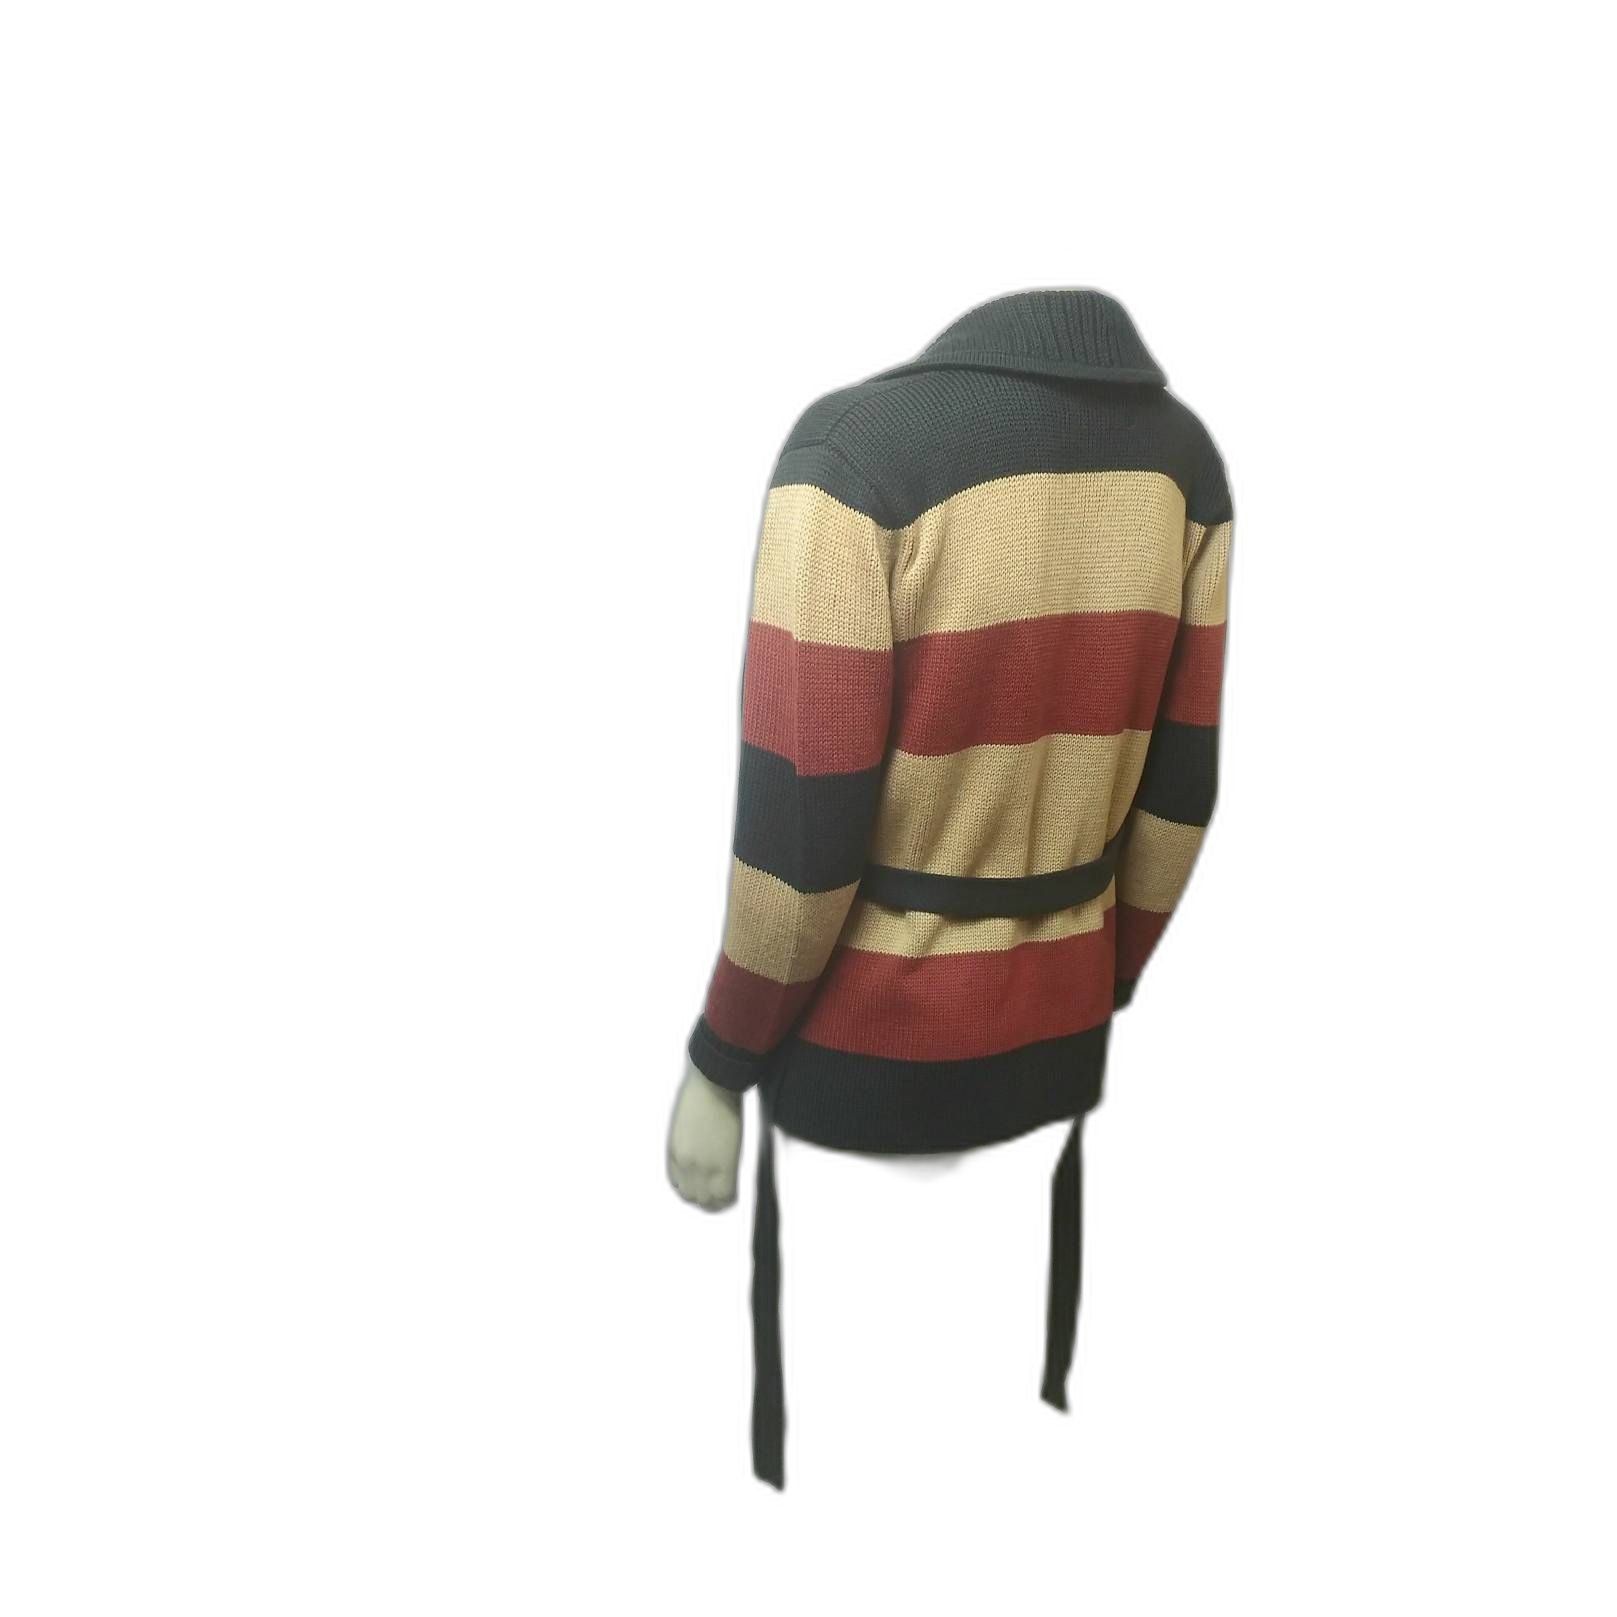 Authenticated Vintage 1960's Yves Saint Laurent Cardigan Sweater